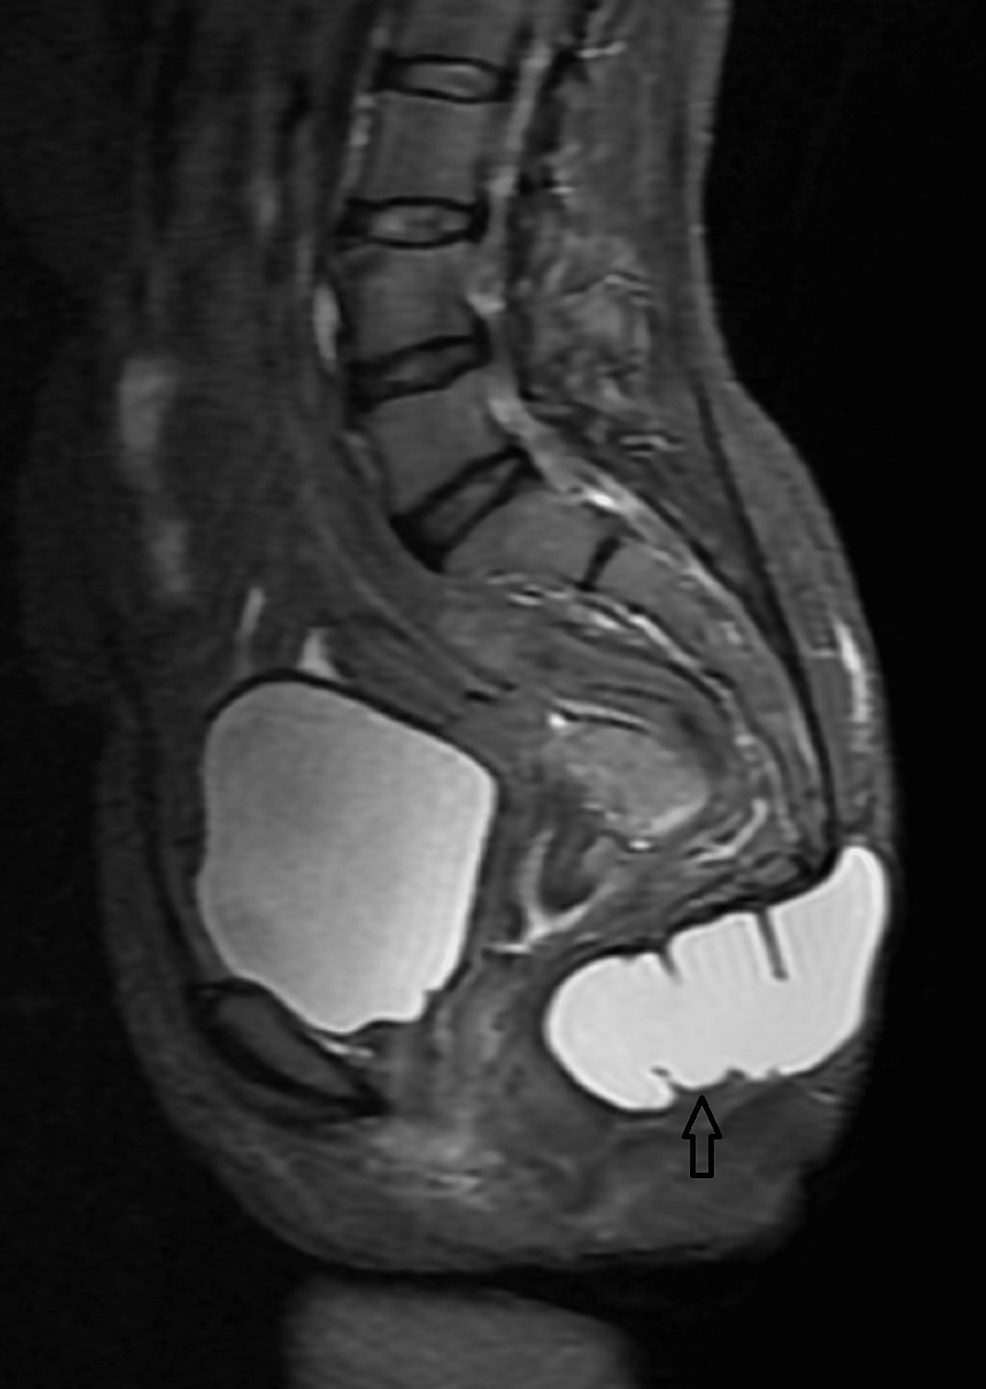 MRI-STIR-image-show-that-the-lesion-is-hyperintense- (black arrow) is shown in the sagittal segment.